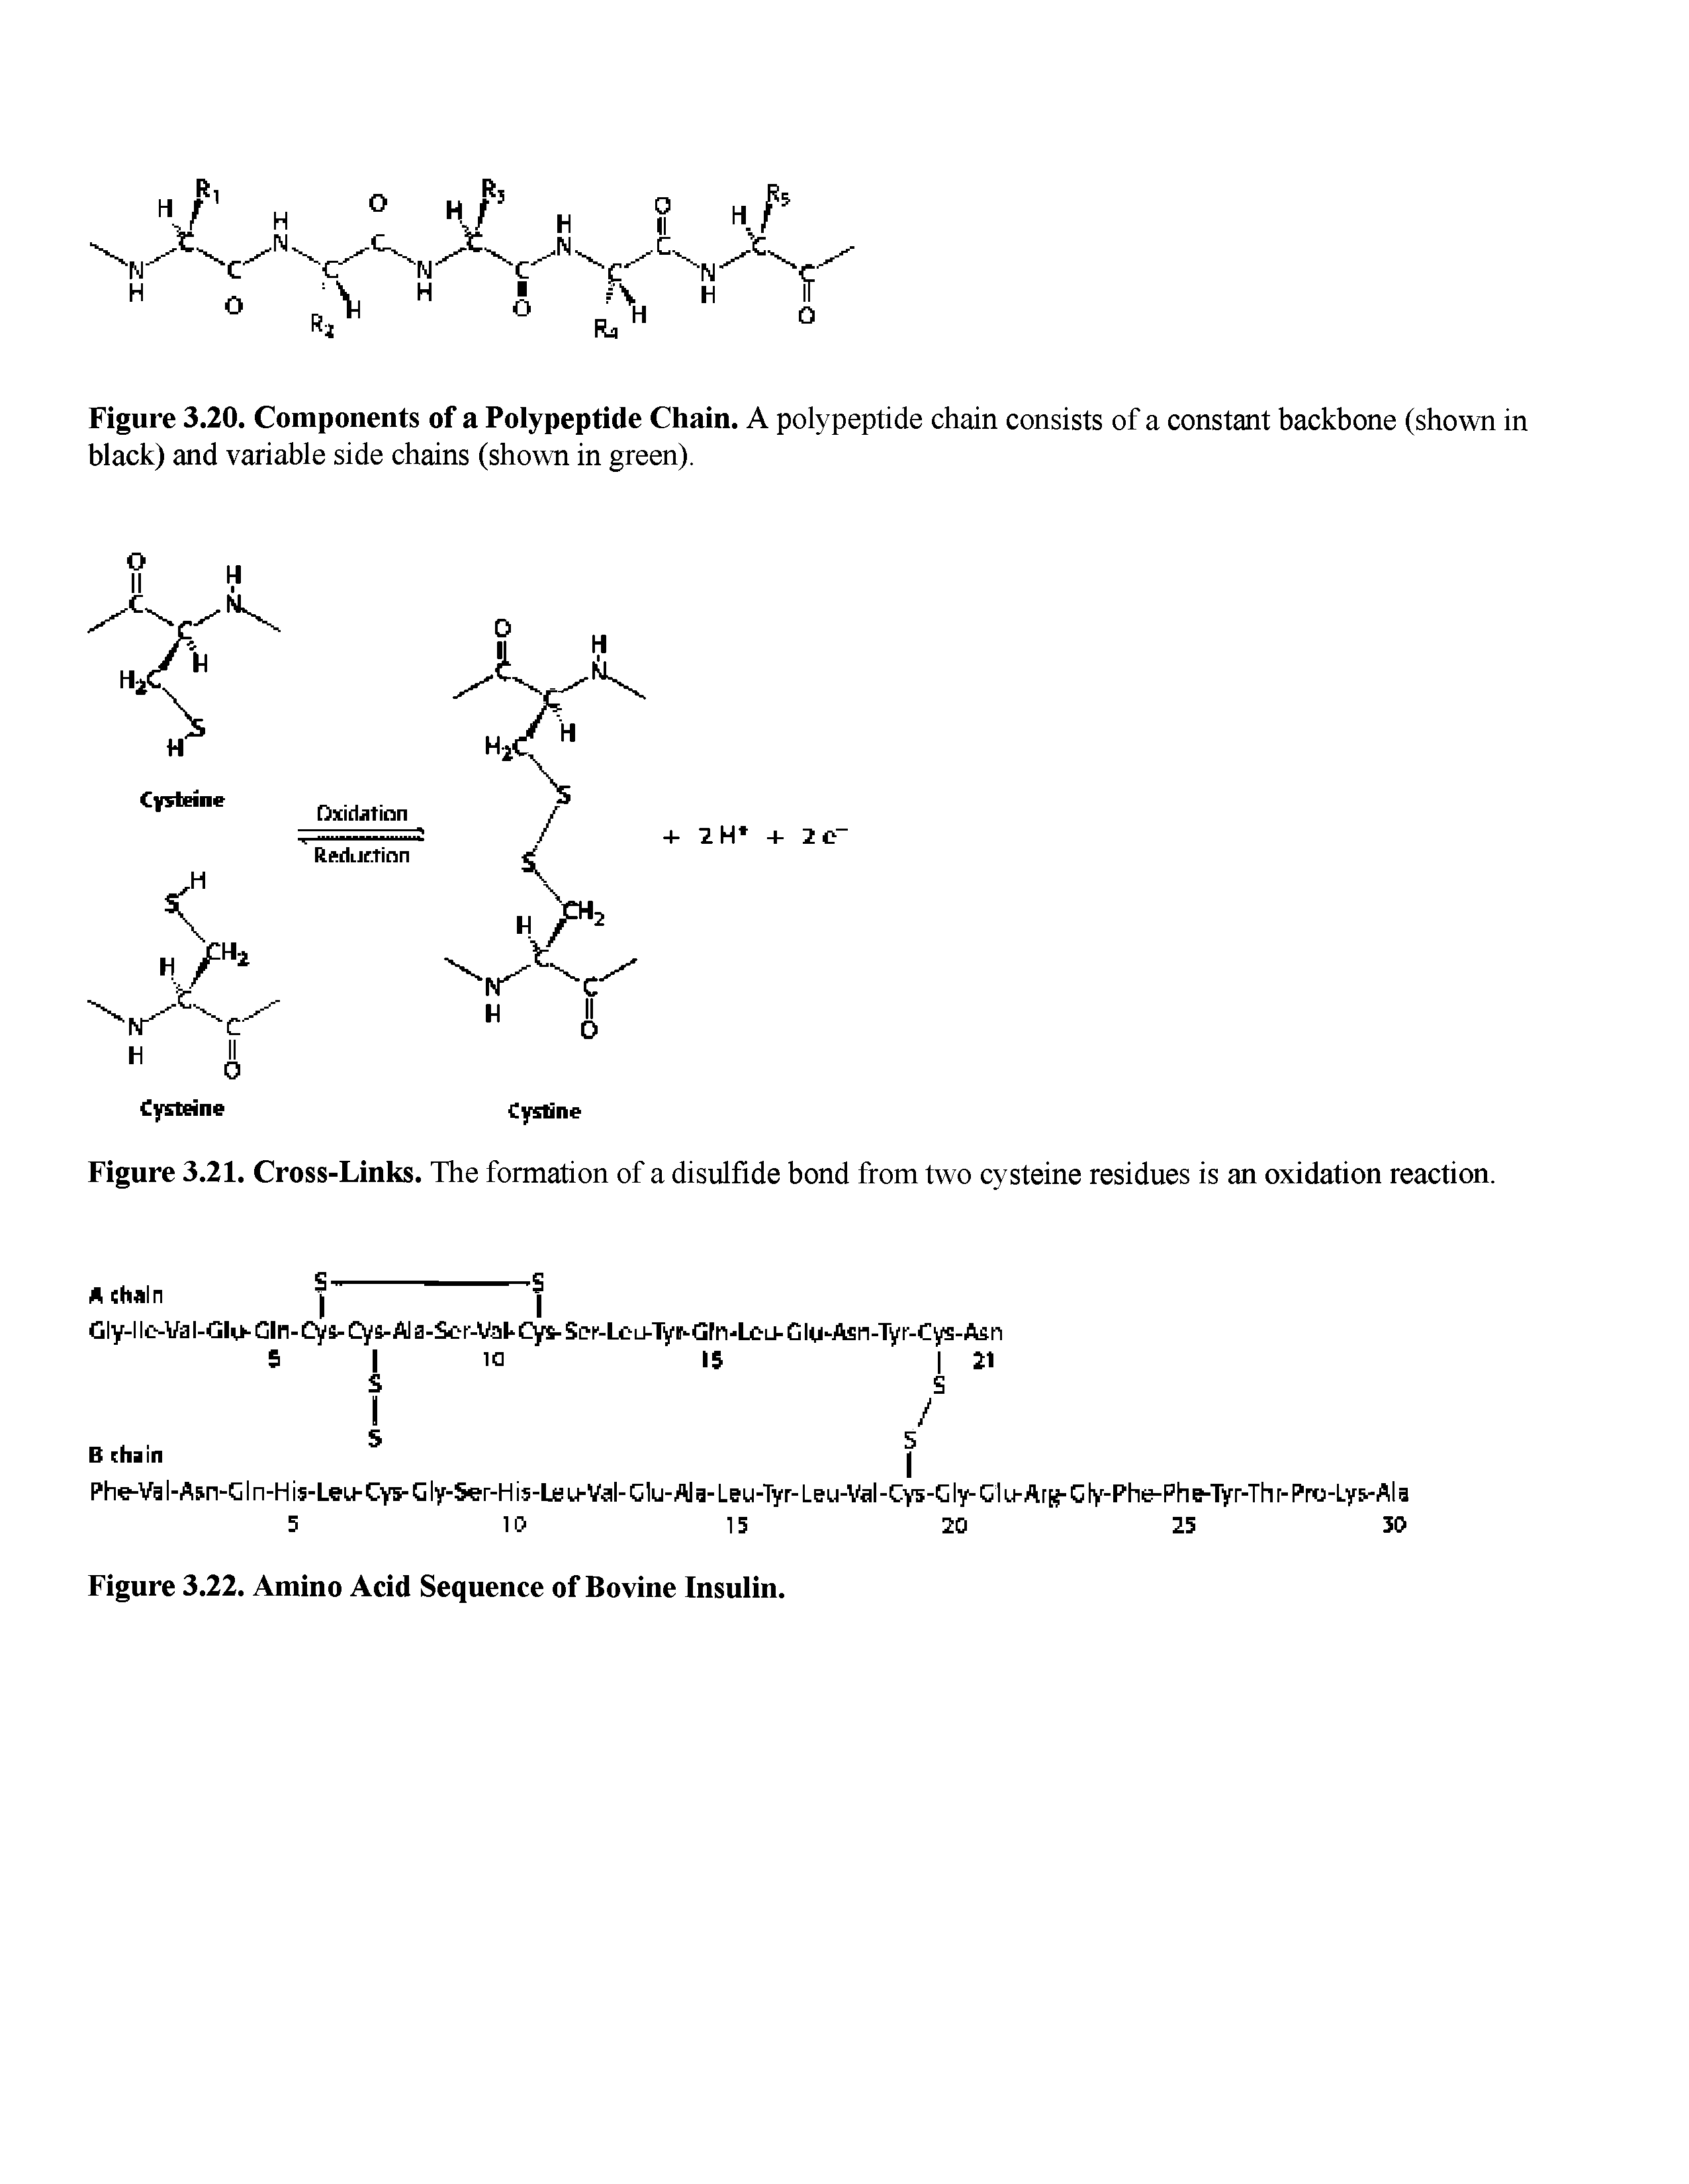 Figure 3.22. Amino Acid Sequence of Bovine Insulin.